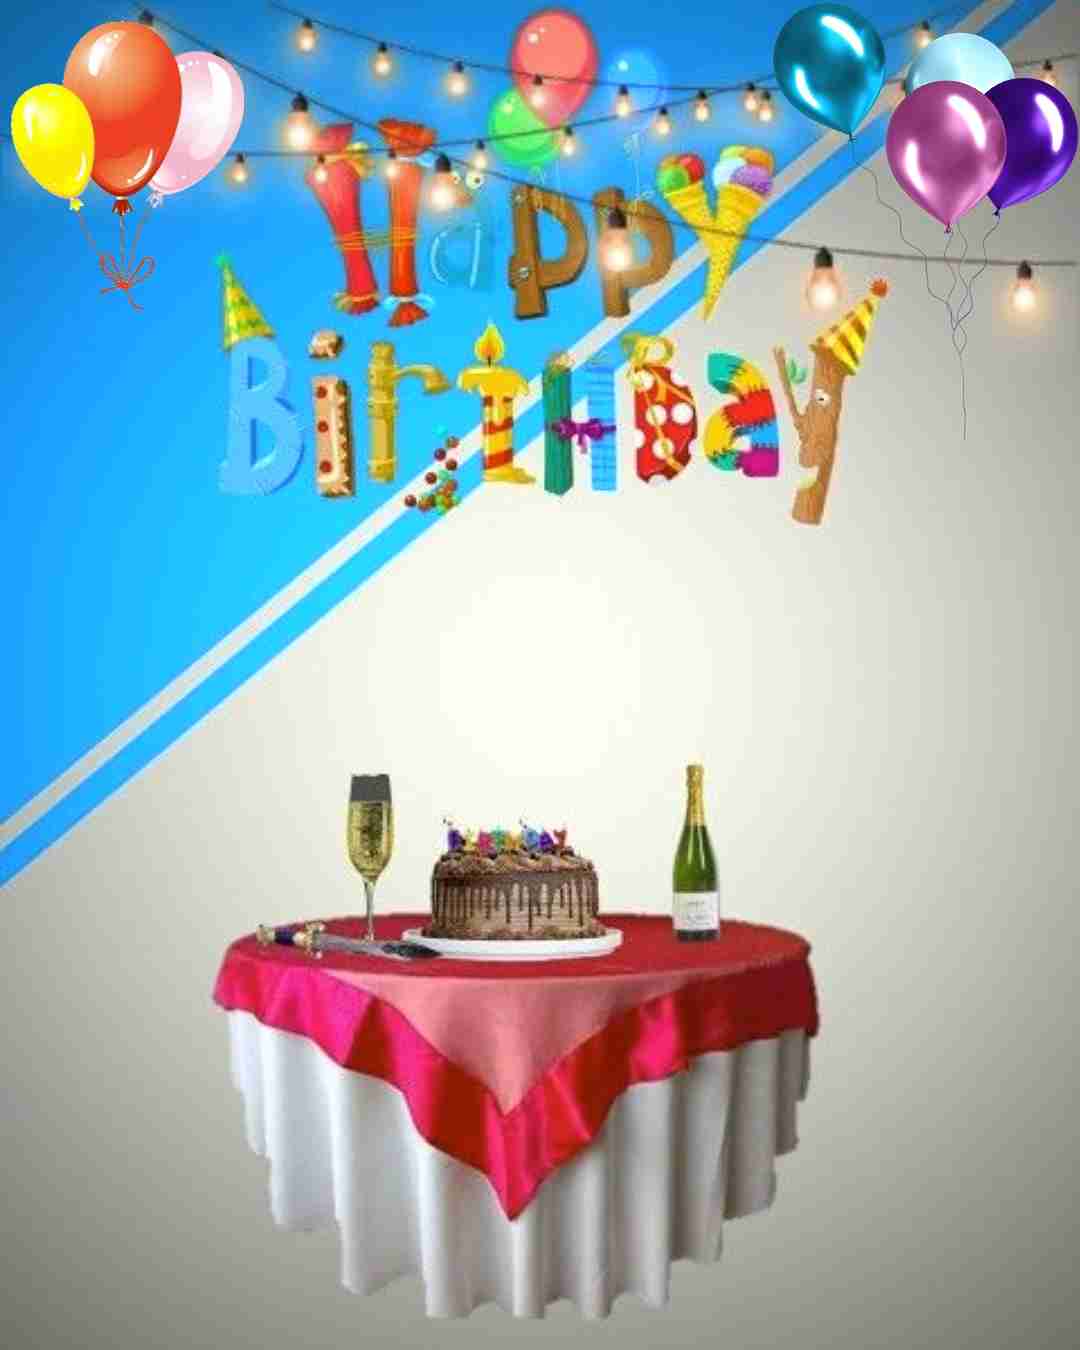 Happy Birthday editing background hd